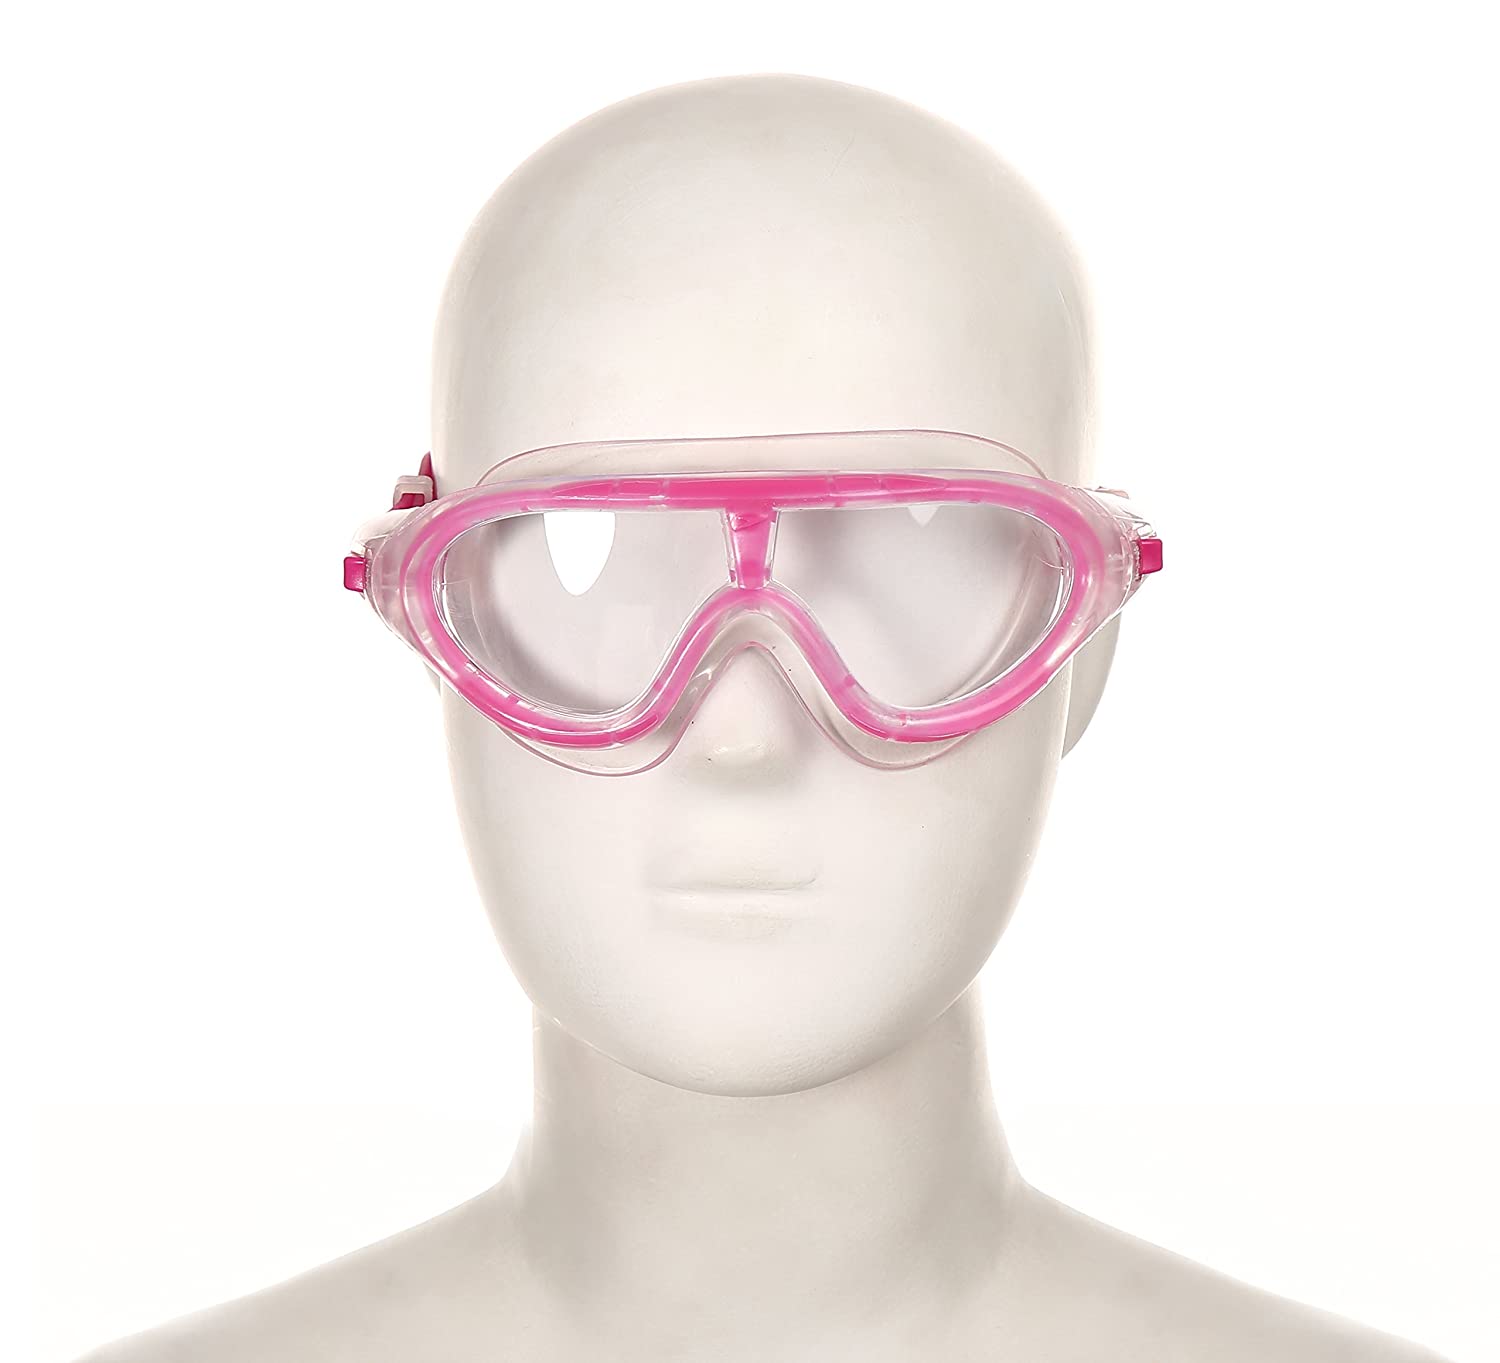 Speedo Unisex - Junior Rift Goggles (Color Assorted) - Best Price online Prokicksports.com